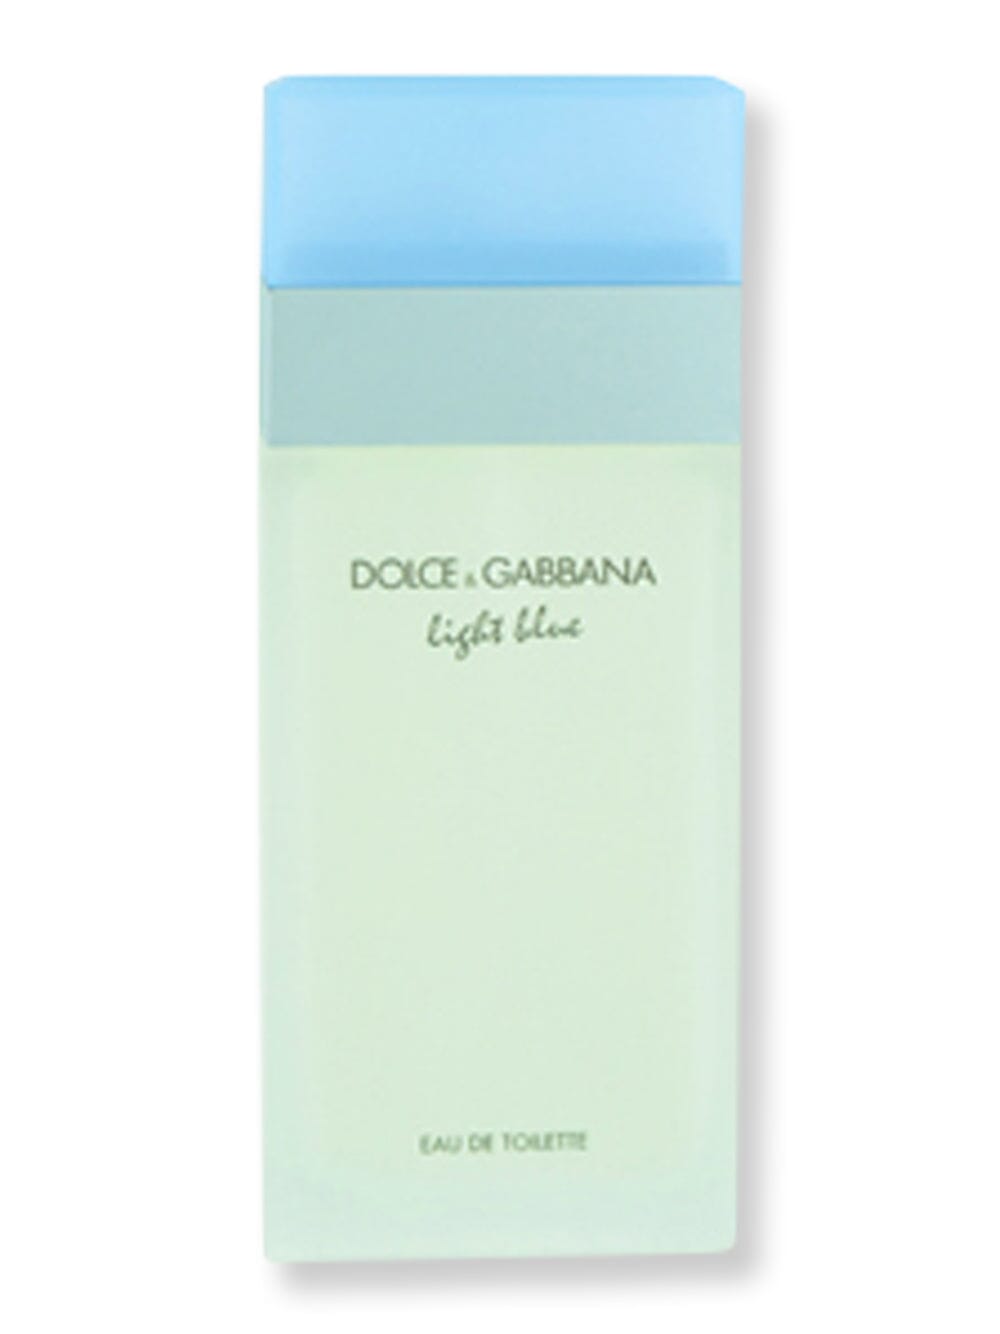 Dolce & Gabbana Dolce & Gabbana Light Blue EDT Spray Tester 3.3 oz100 ml Perfume 